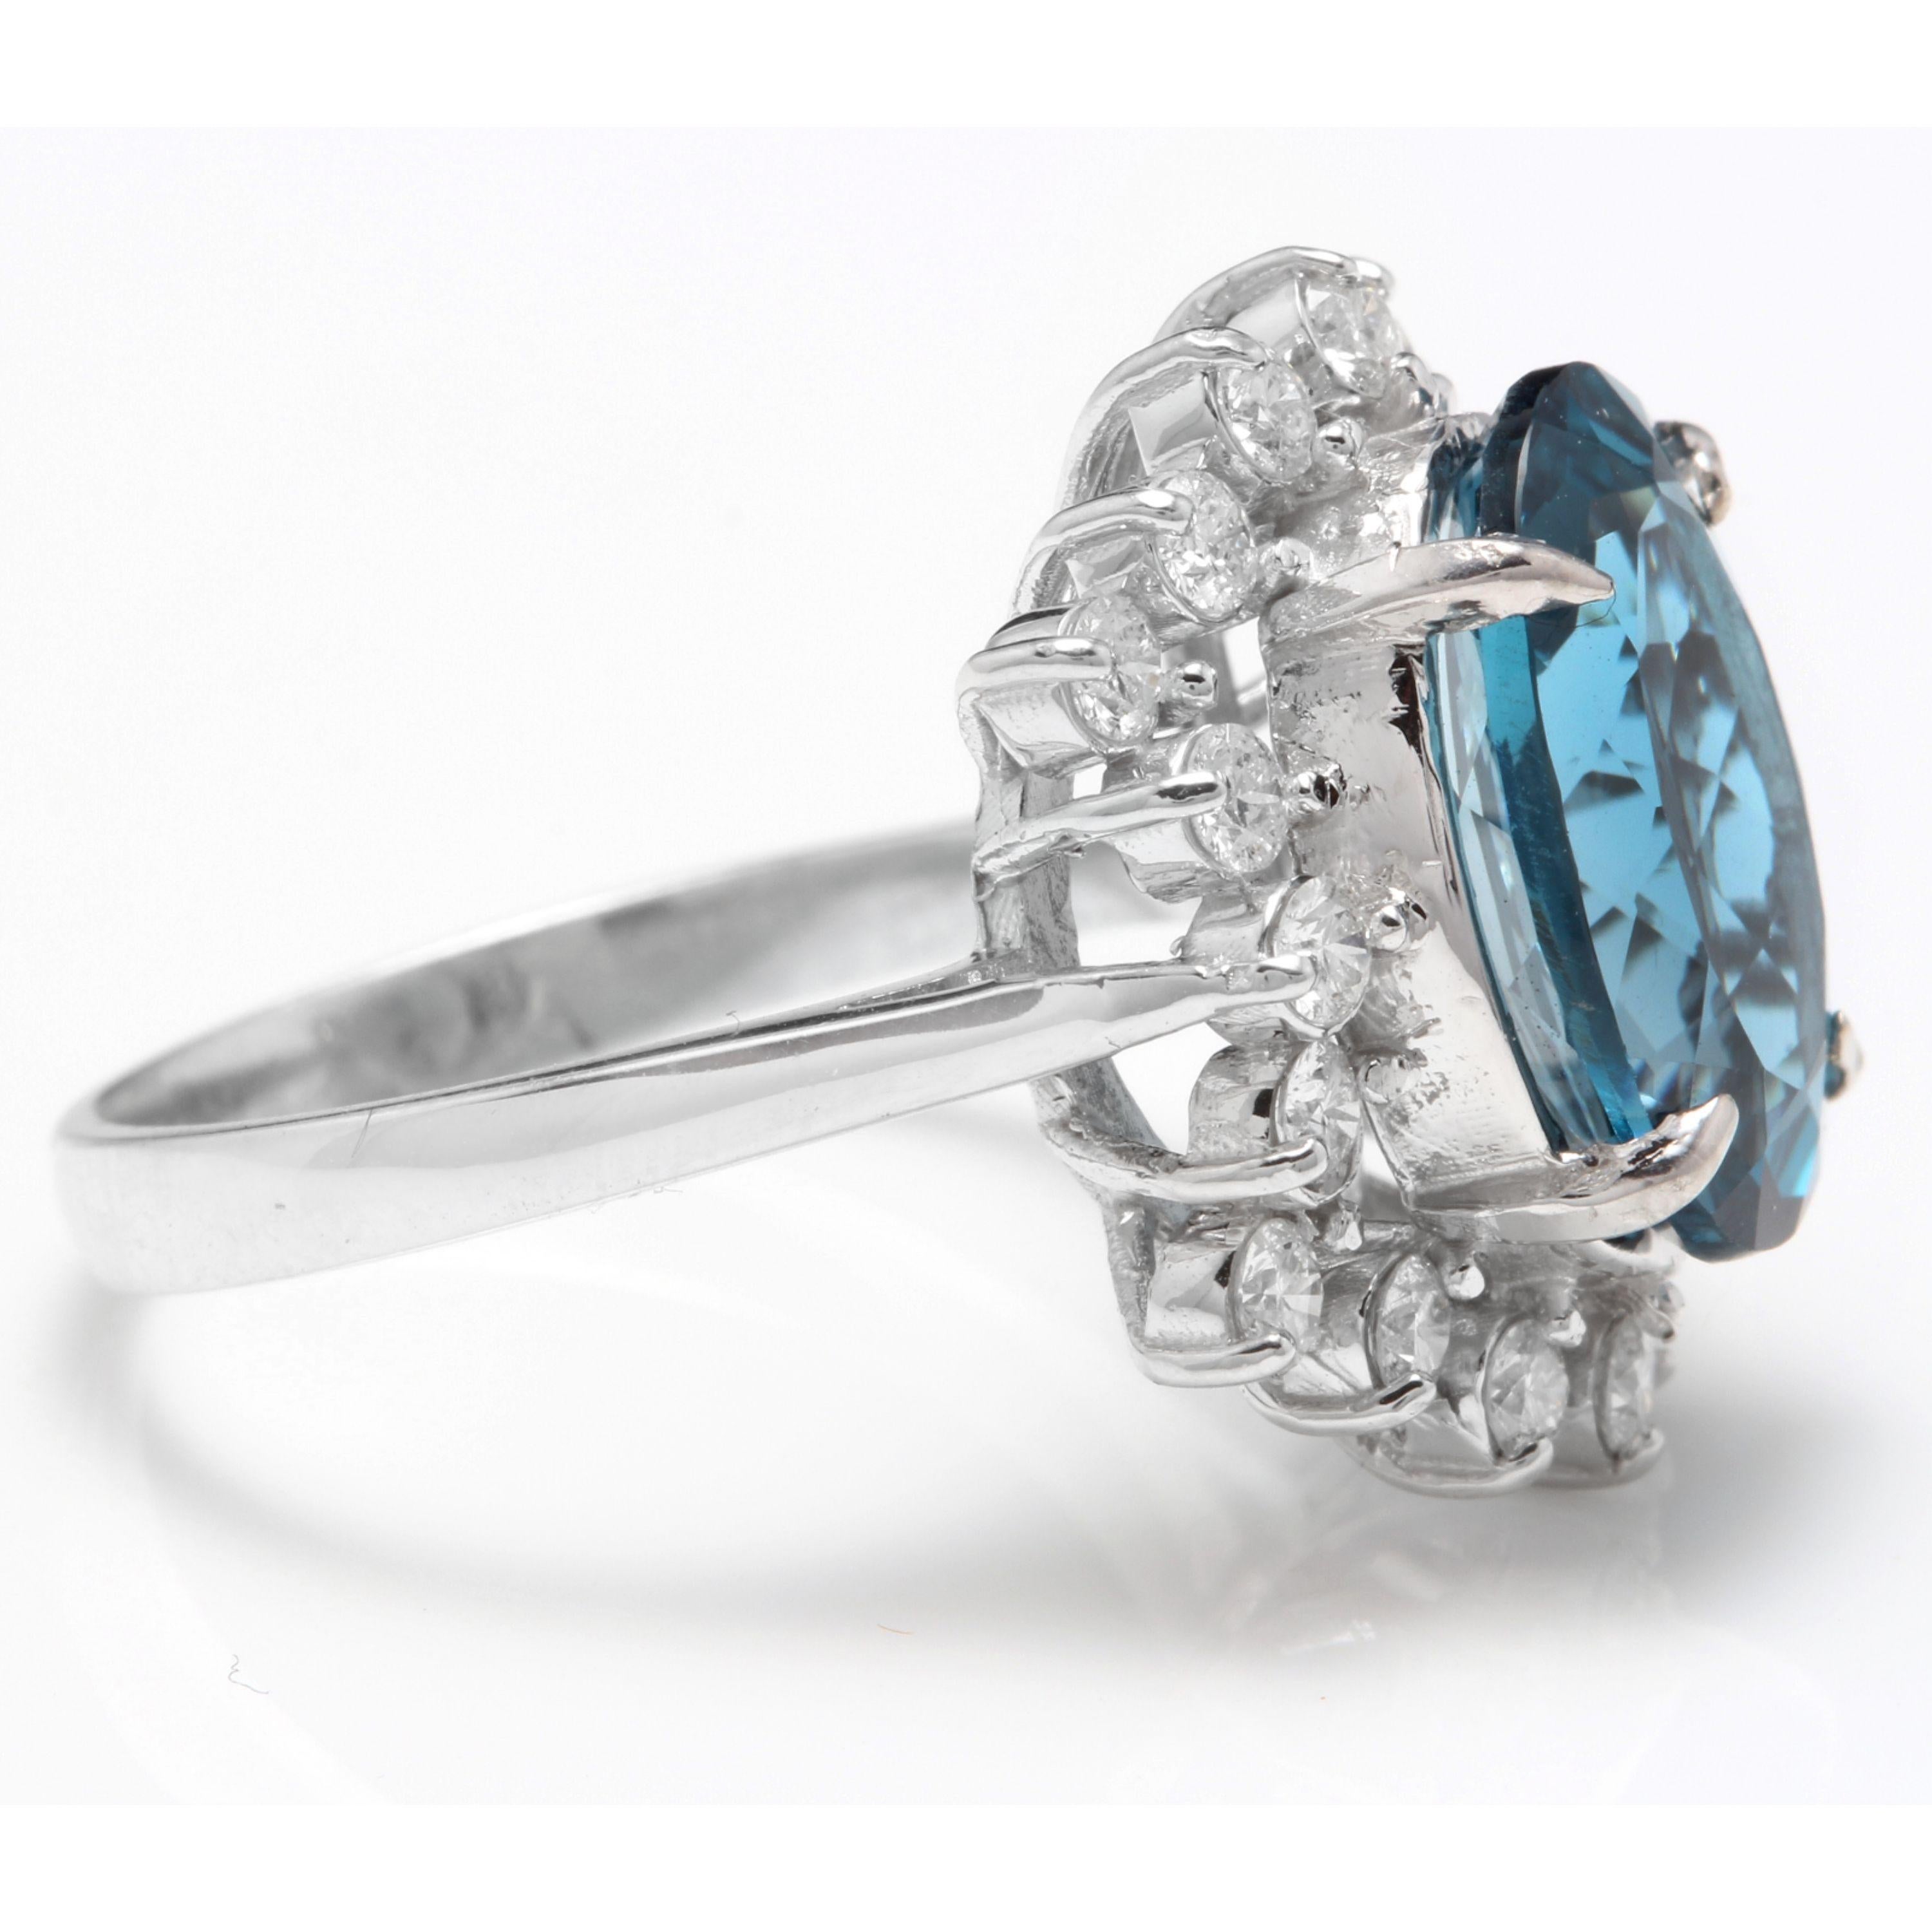 Mixed Cut 6.90 Carat Natural Impressive London Blue Topaz and Diamond 14 Karat Gold Ring For Sale